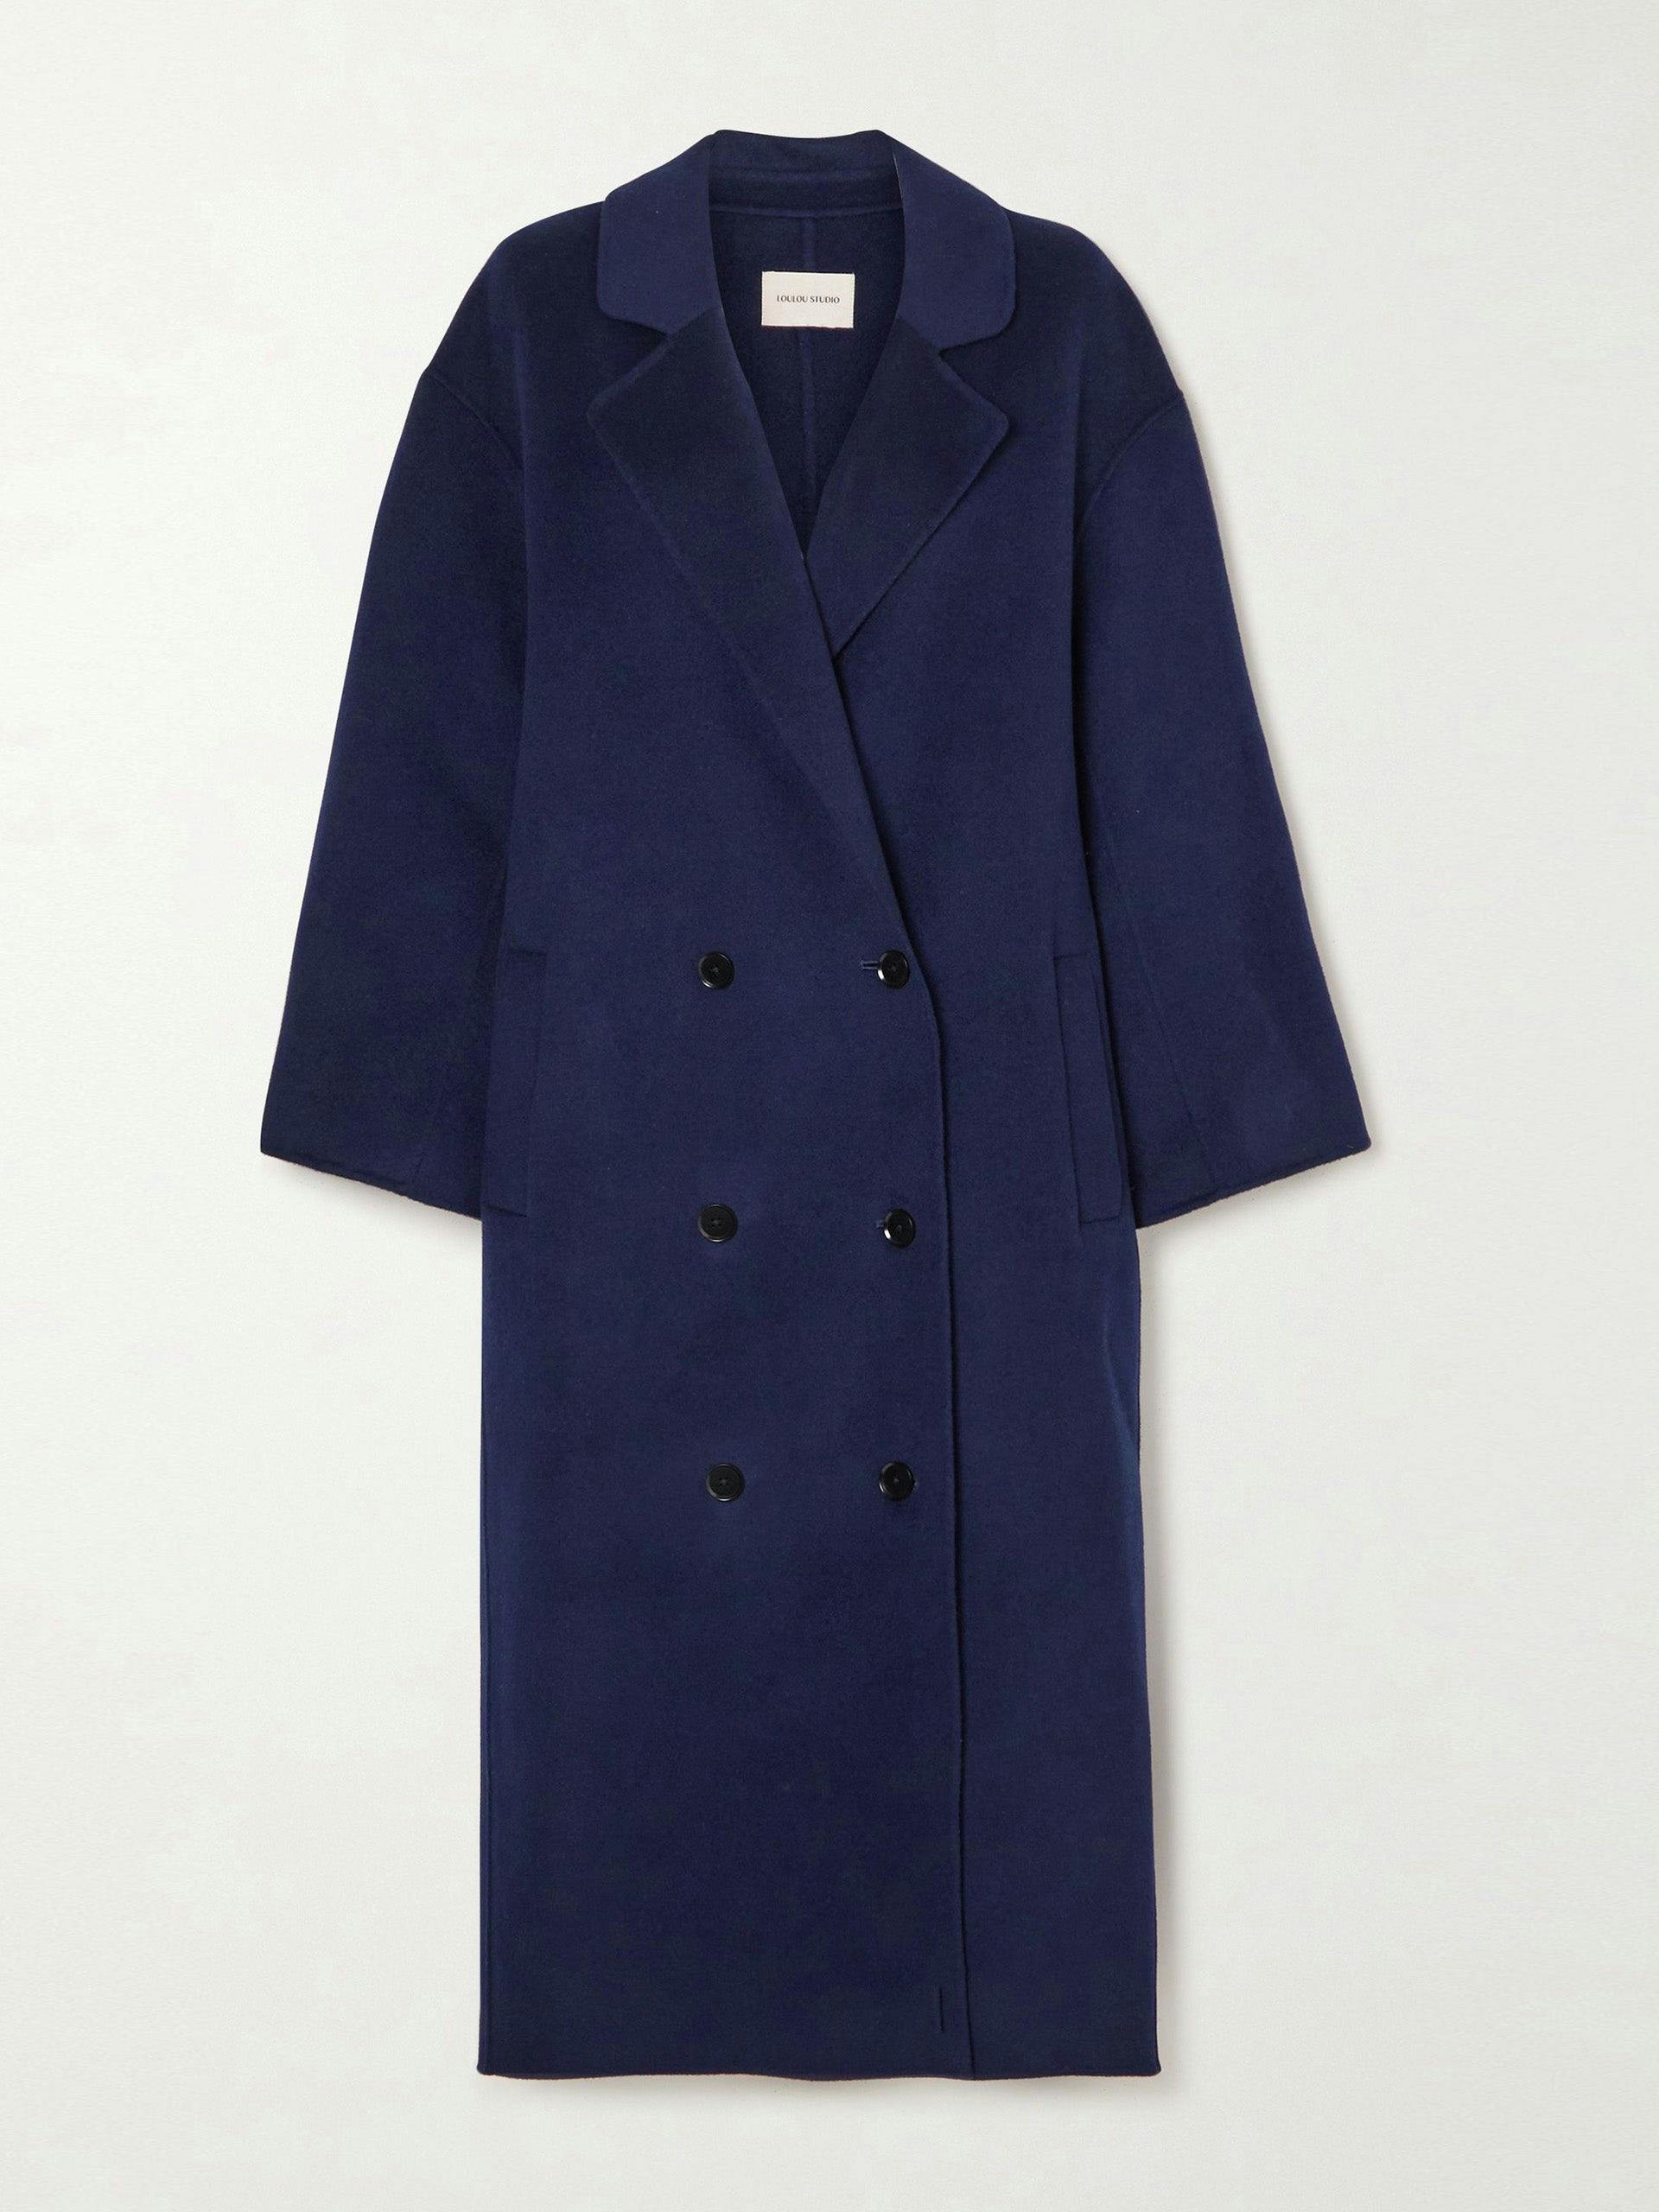 Navy cashmere-blend coat